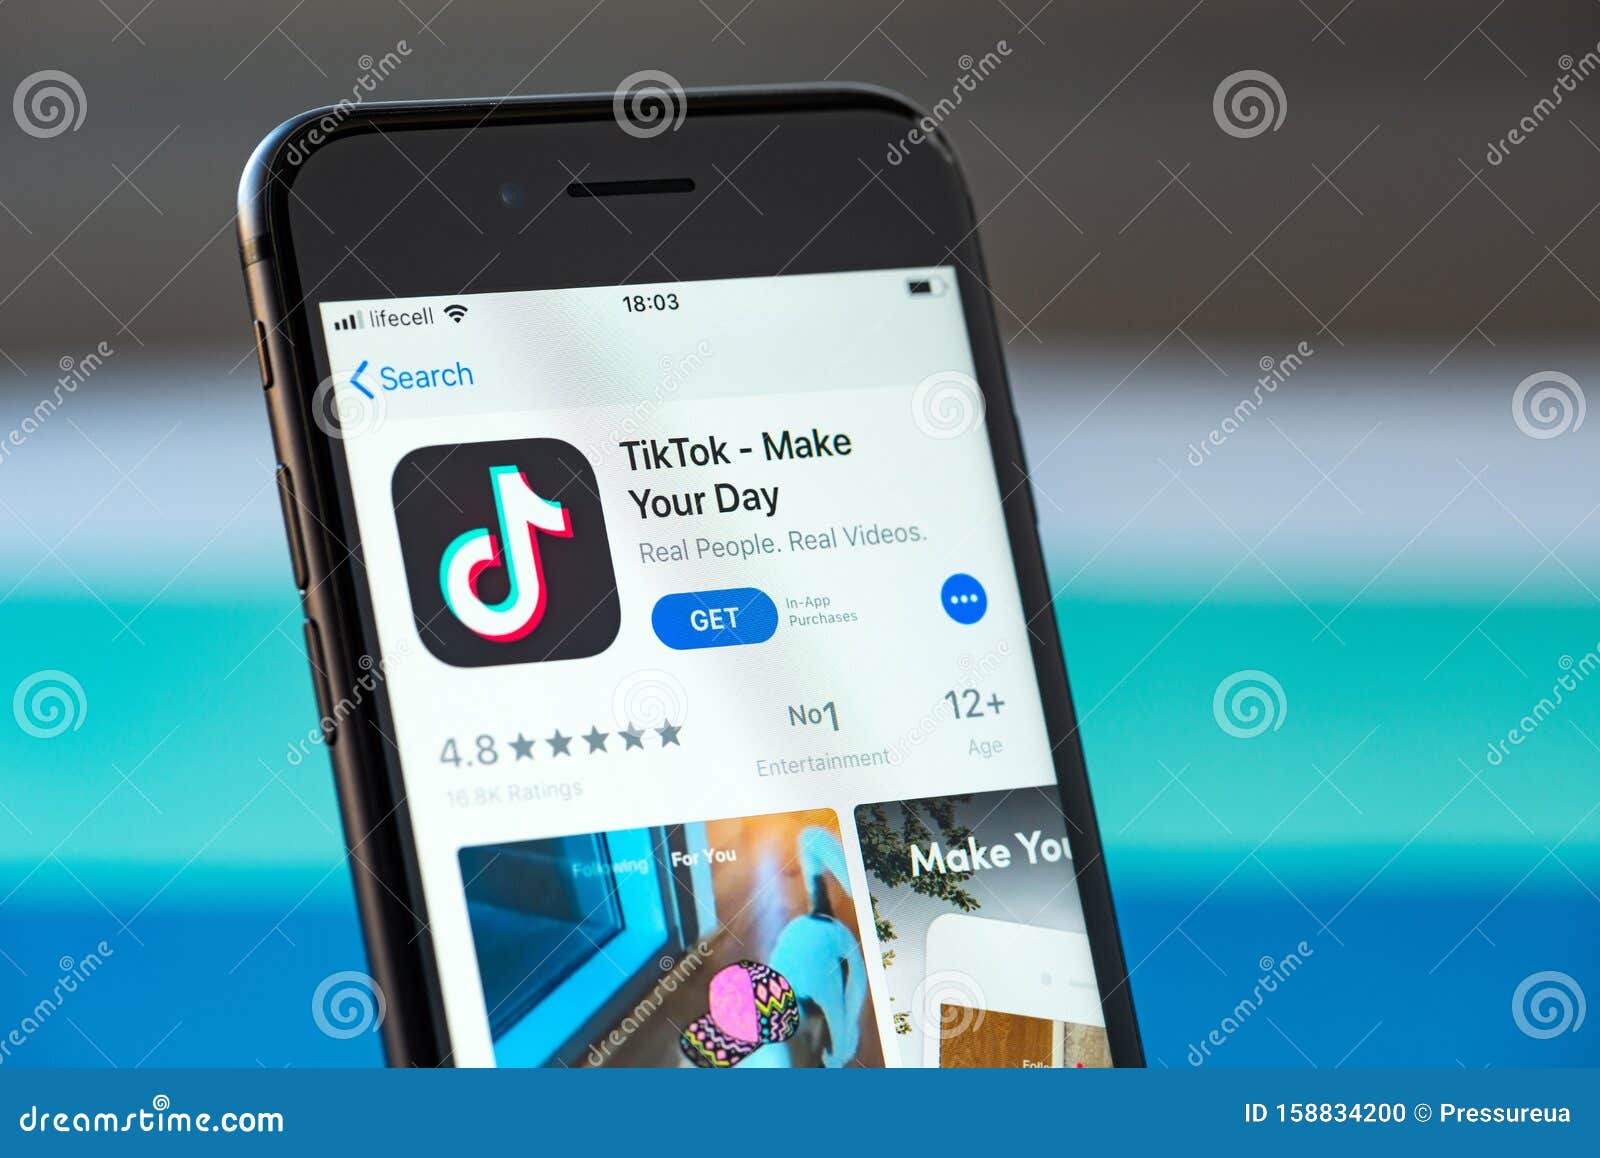 Tiktok Application On Apple Iphone 8 Screen Editorial Image